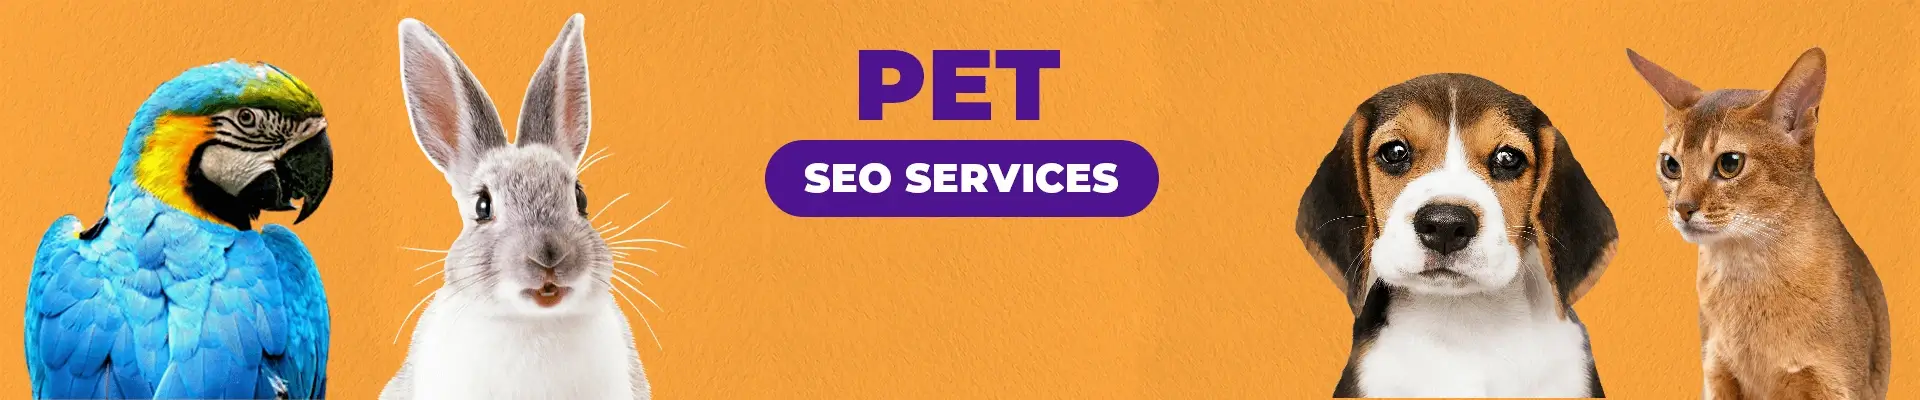 Best Pet SEO Services Company | Pet SEO Expert For Hire